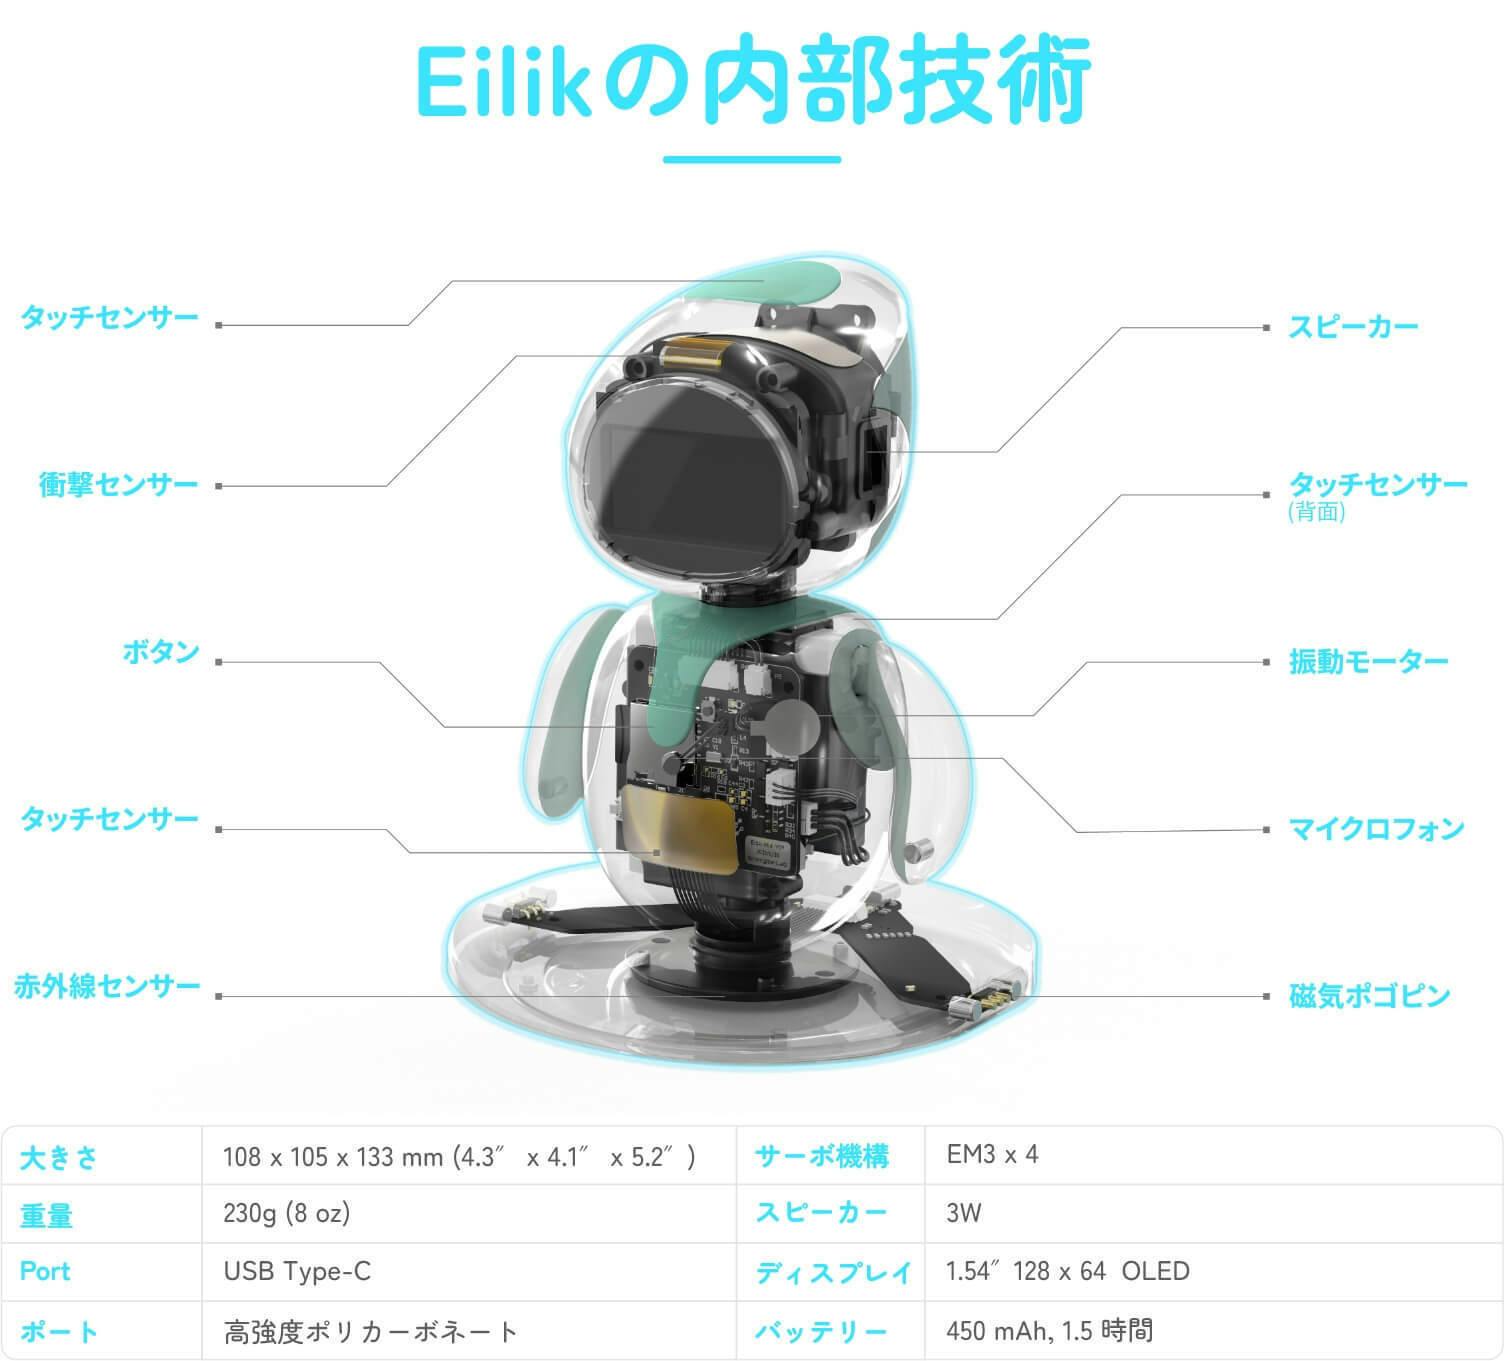 Eilik「アイリック」ロボット 日本版 2個セット - その他